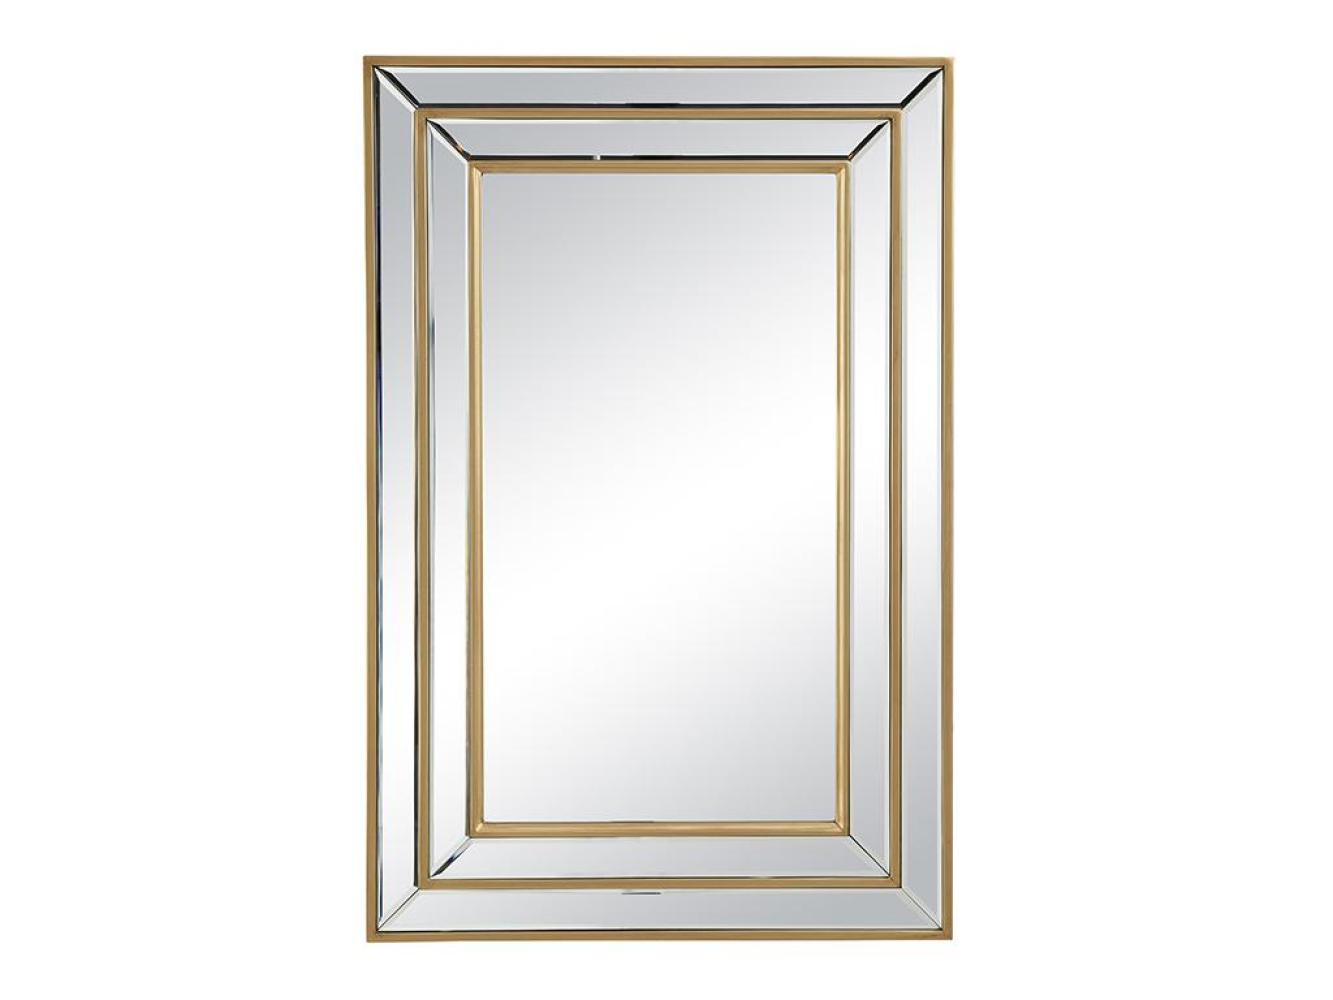 Spiegel BAKOU - Rahmen aus Eukalyptusholz - H. 90 cm - Goldfarben Bild 1